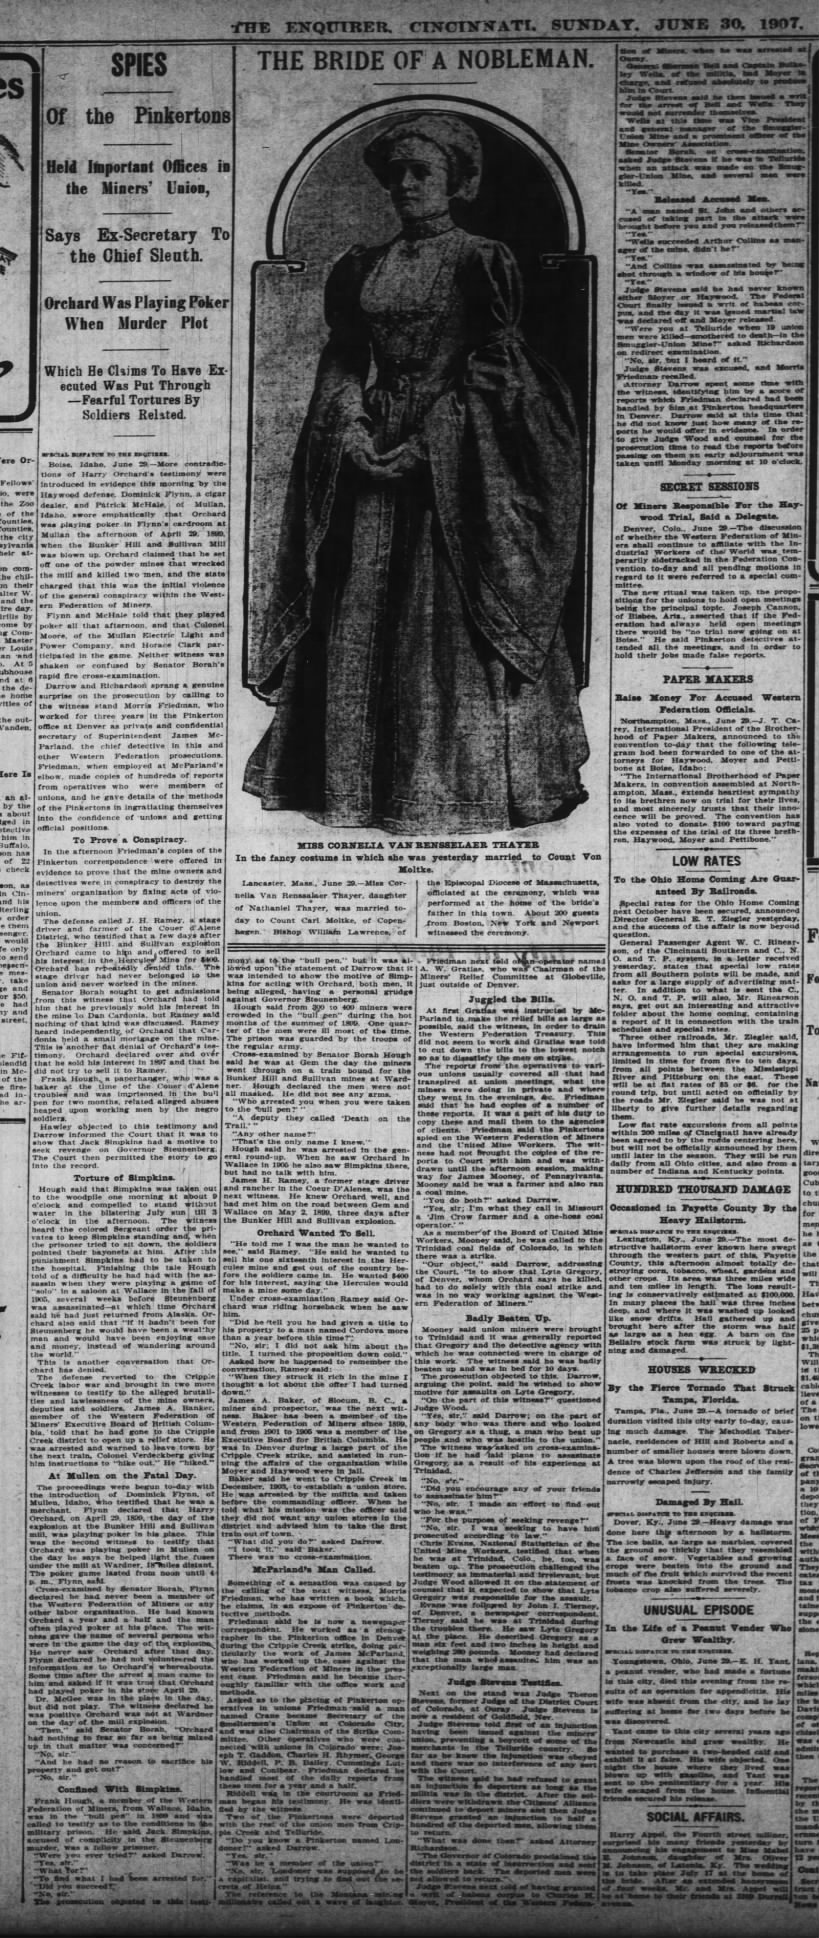 Cincinnati Enquirer 30 June 1907